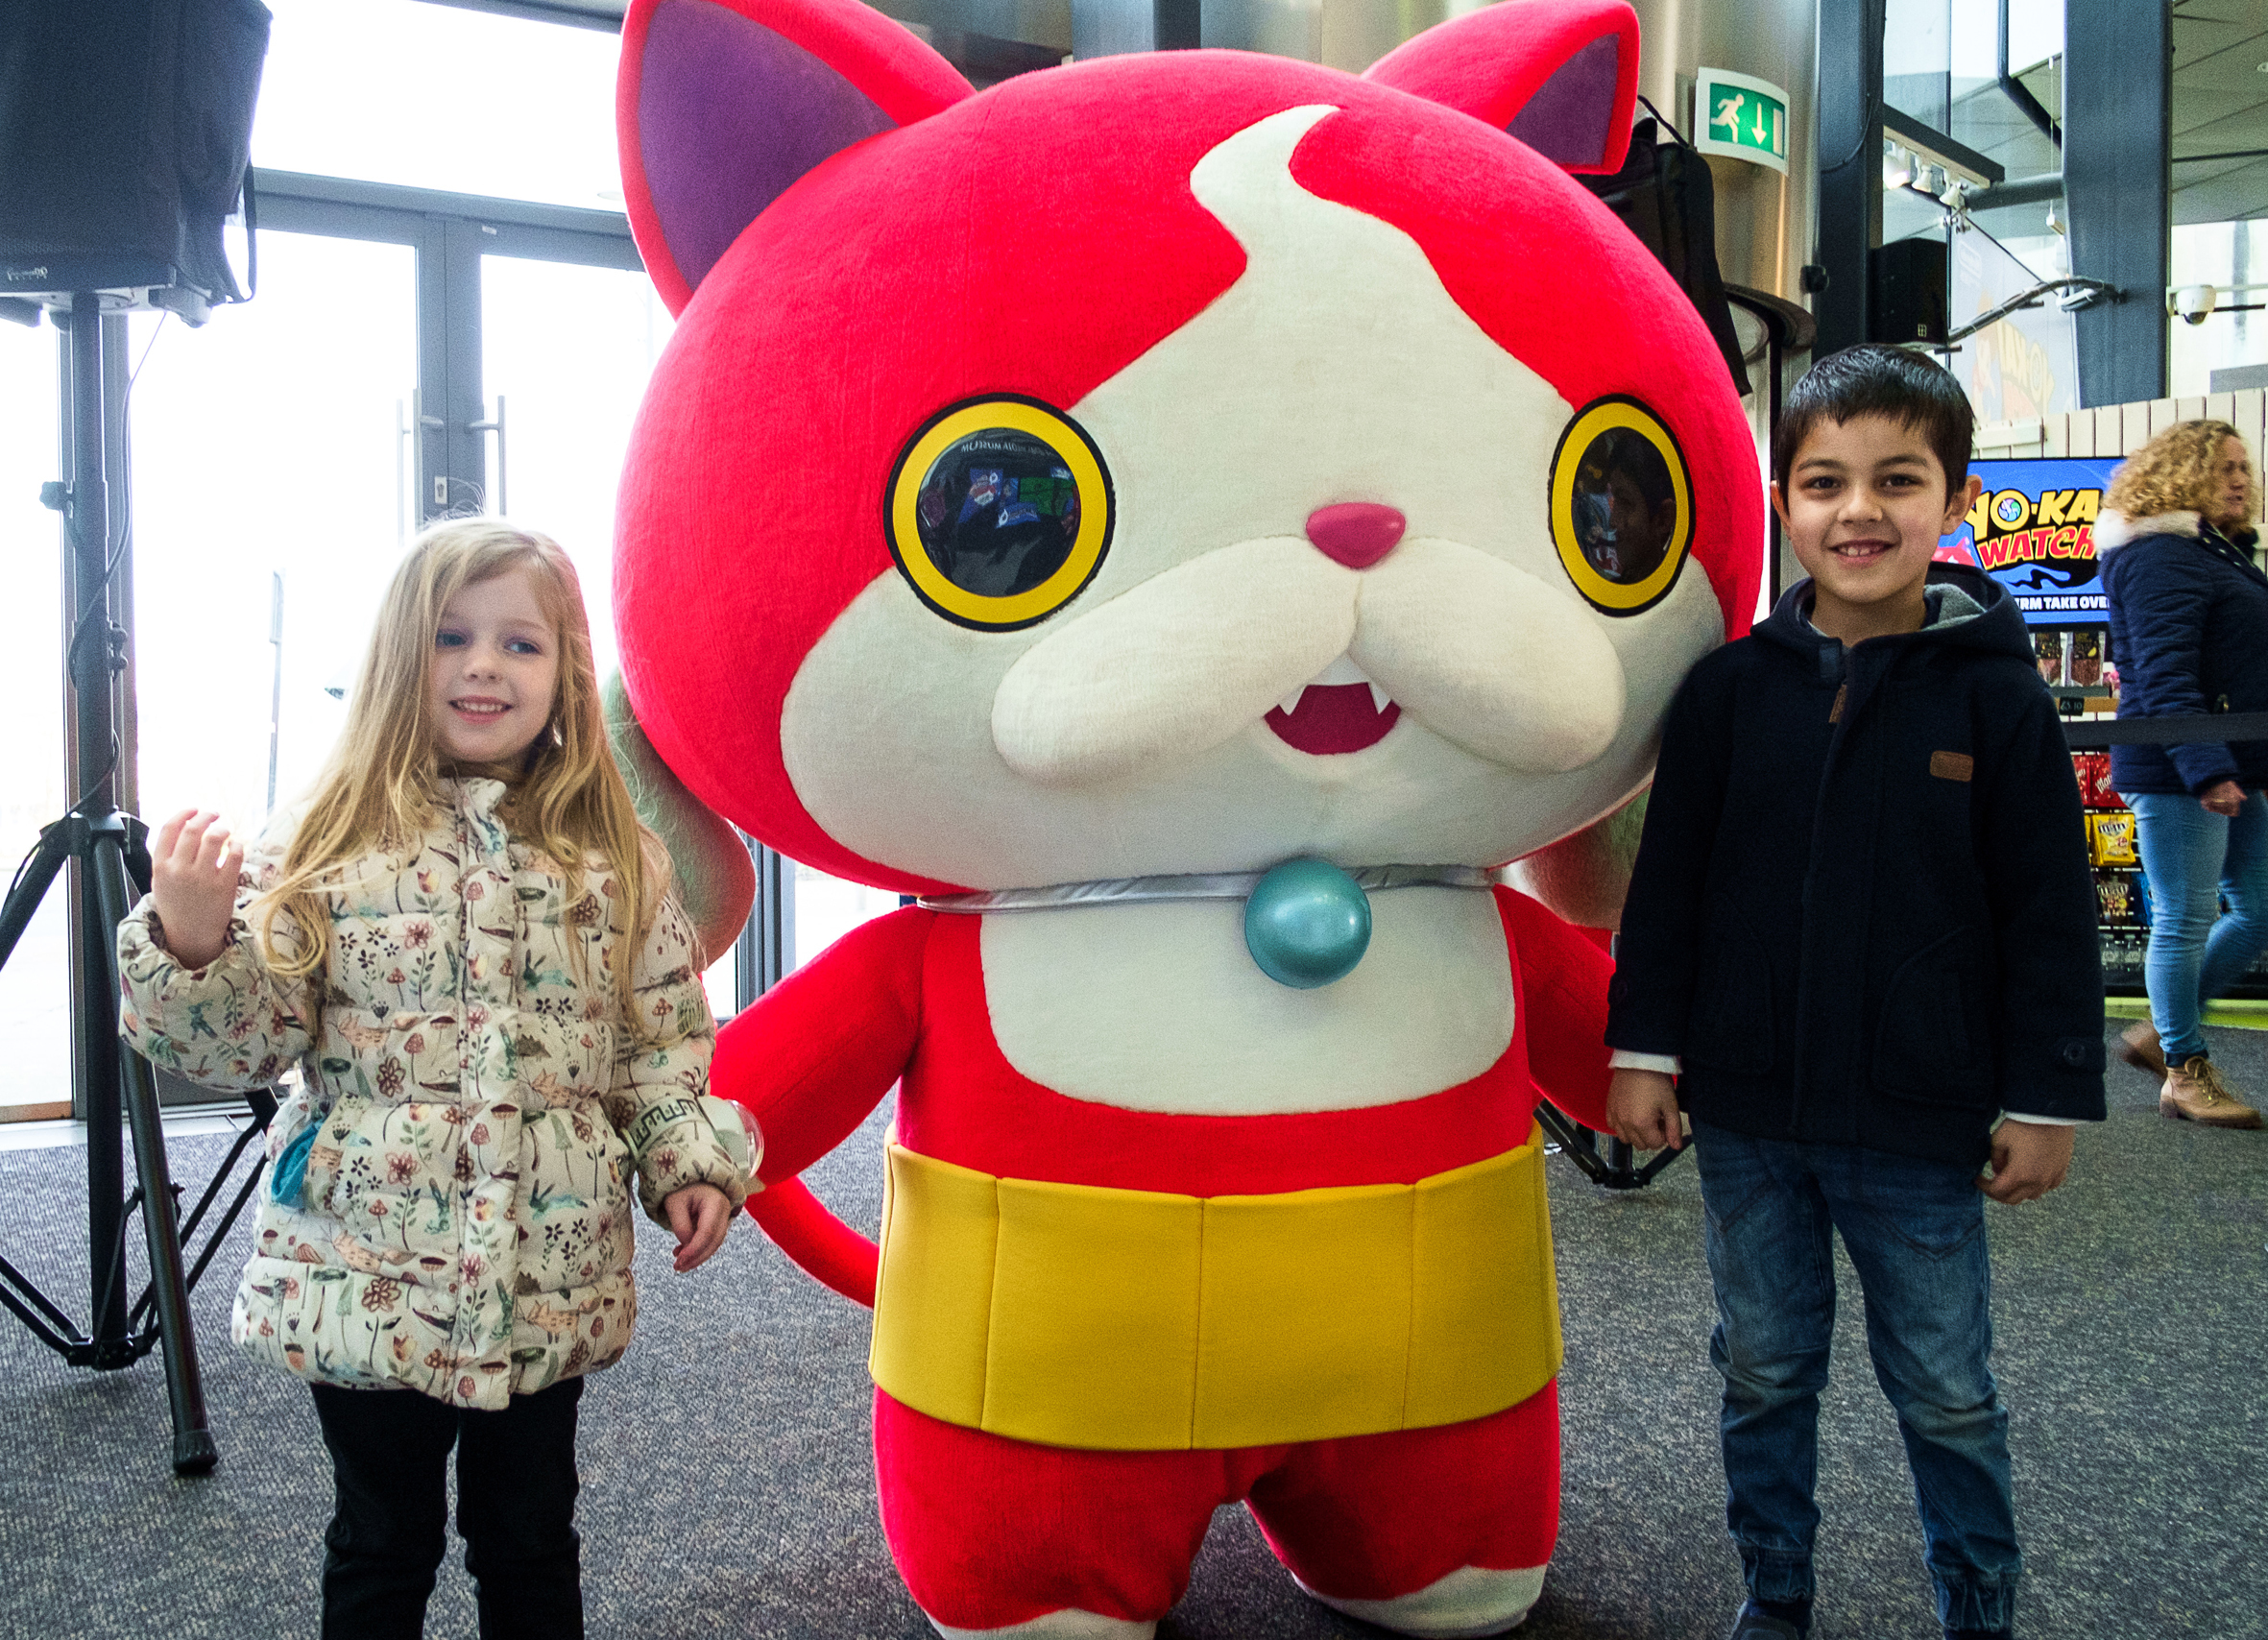 Children flock to Yo-Kai Watch gaming event at National Media Museum